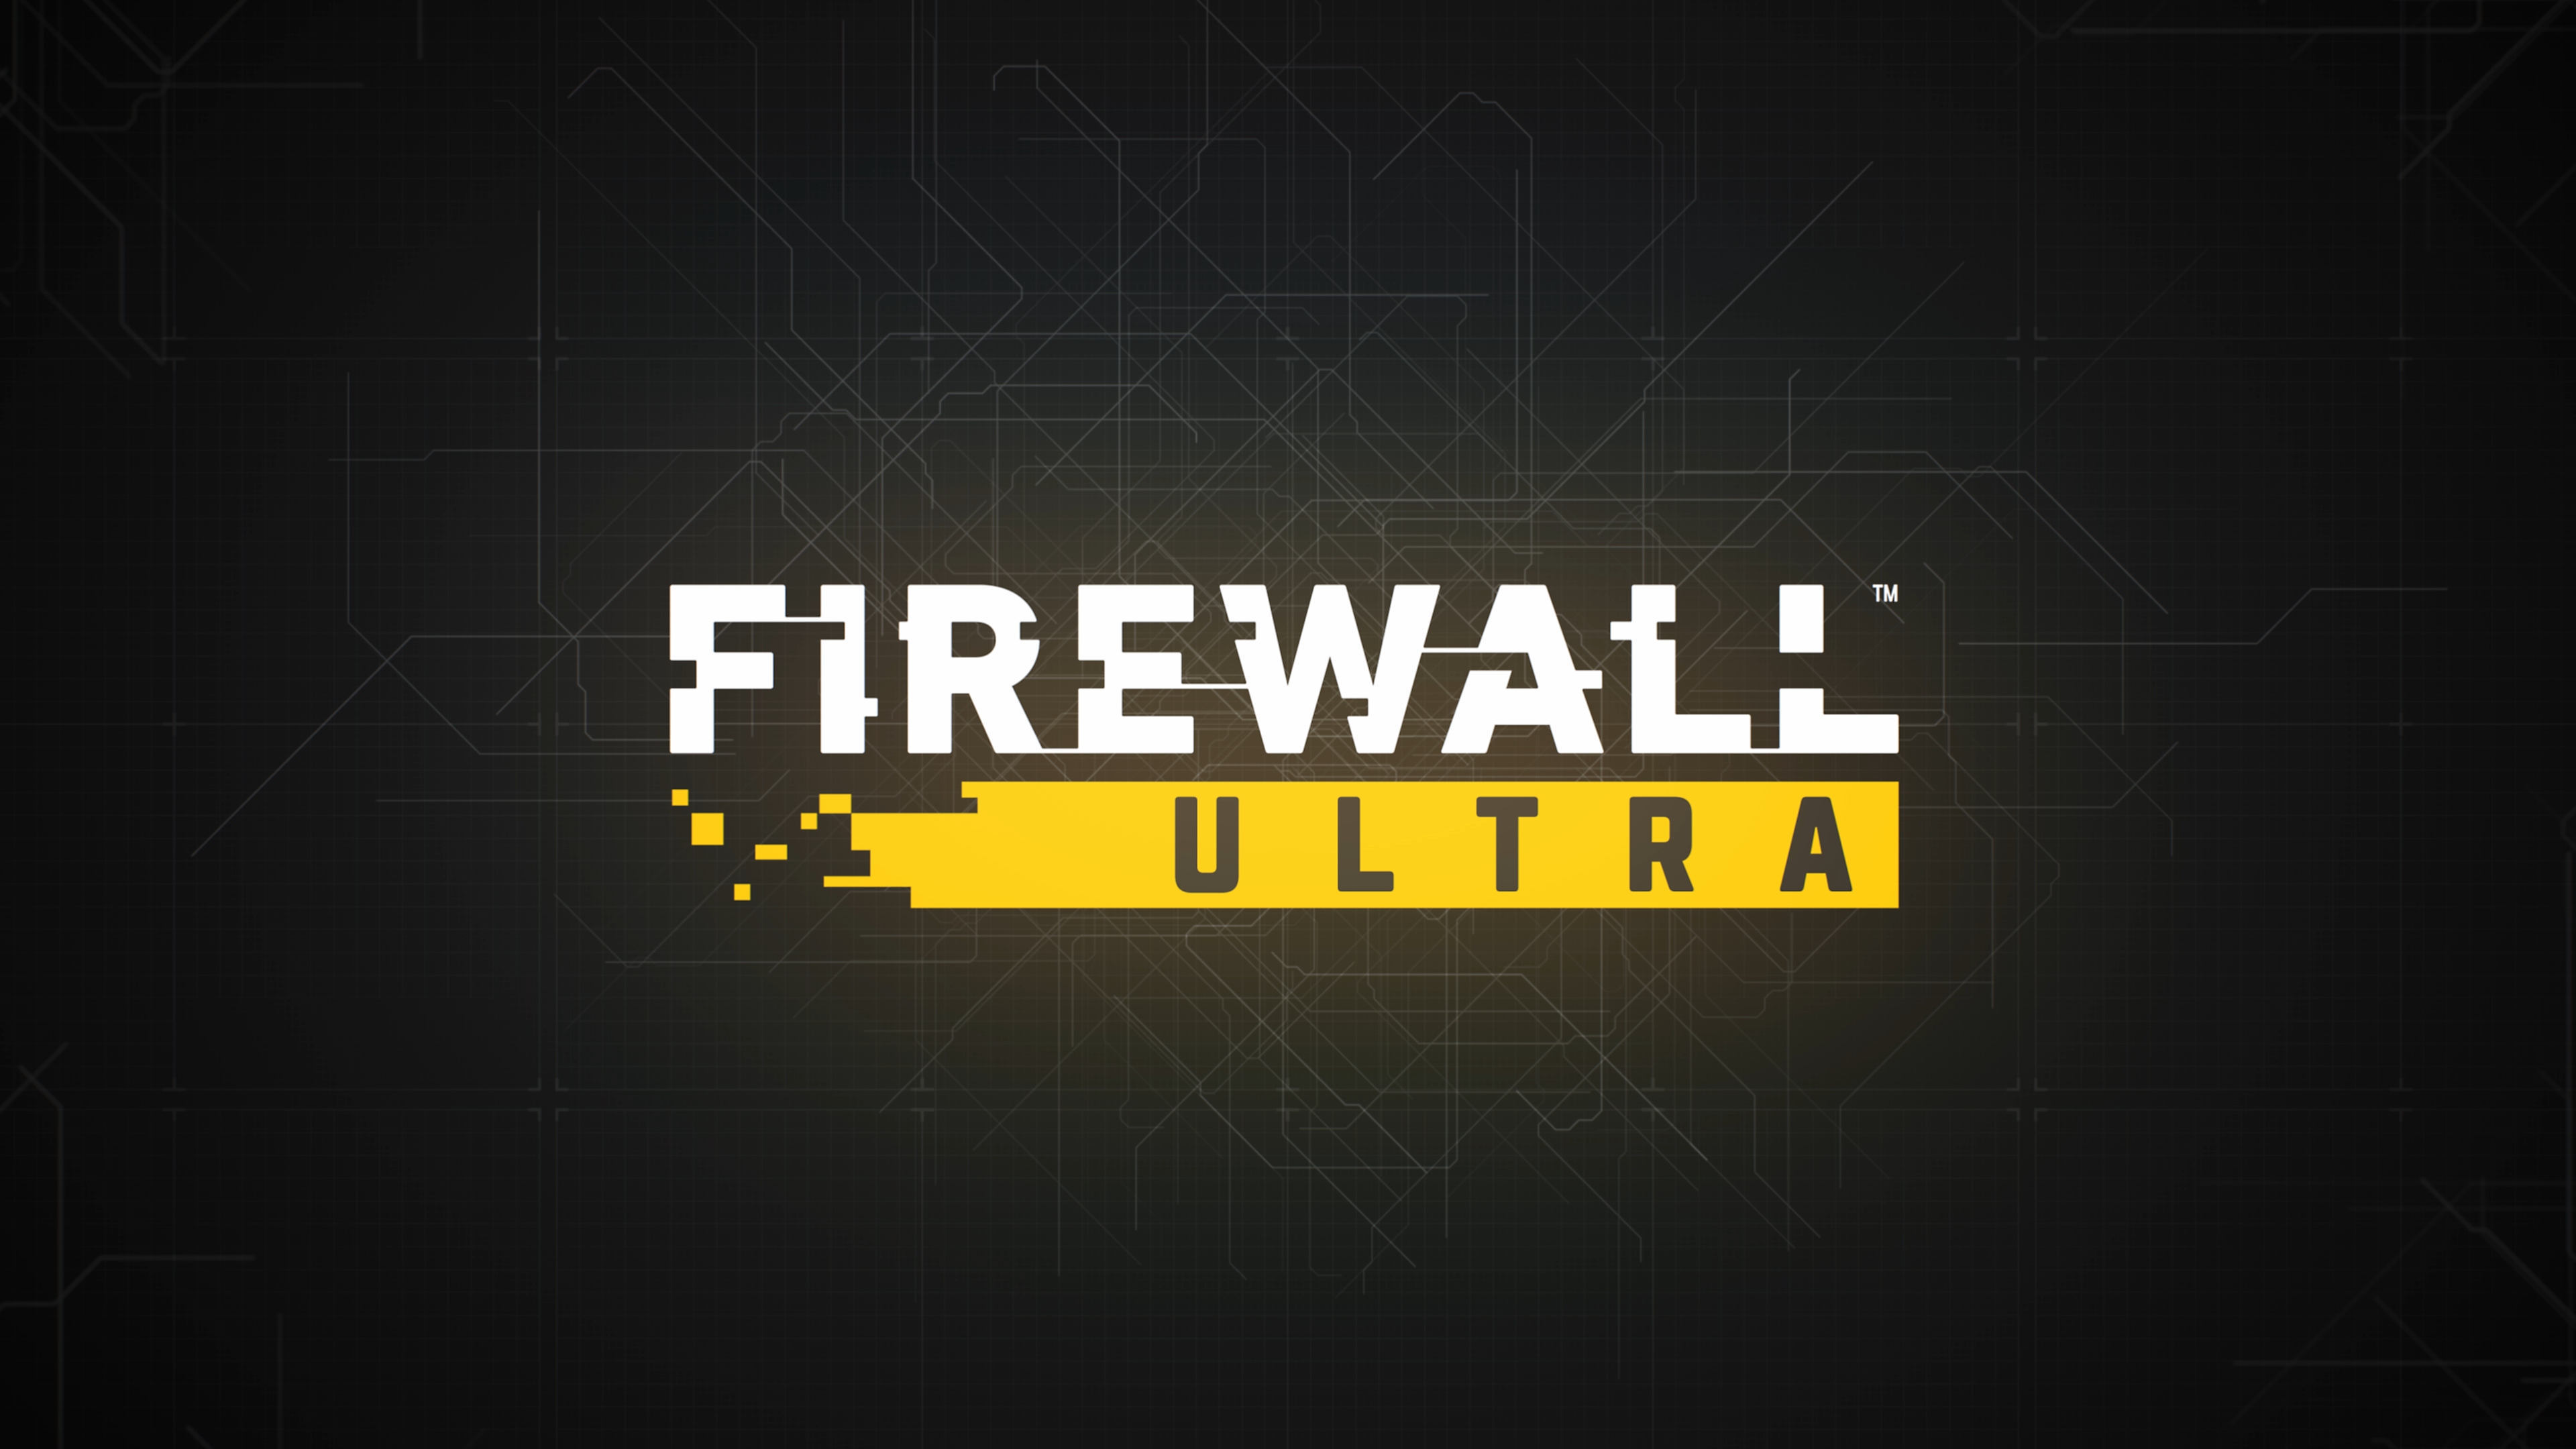 《Firewall Ultra》截屏主题宣传海报